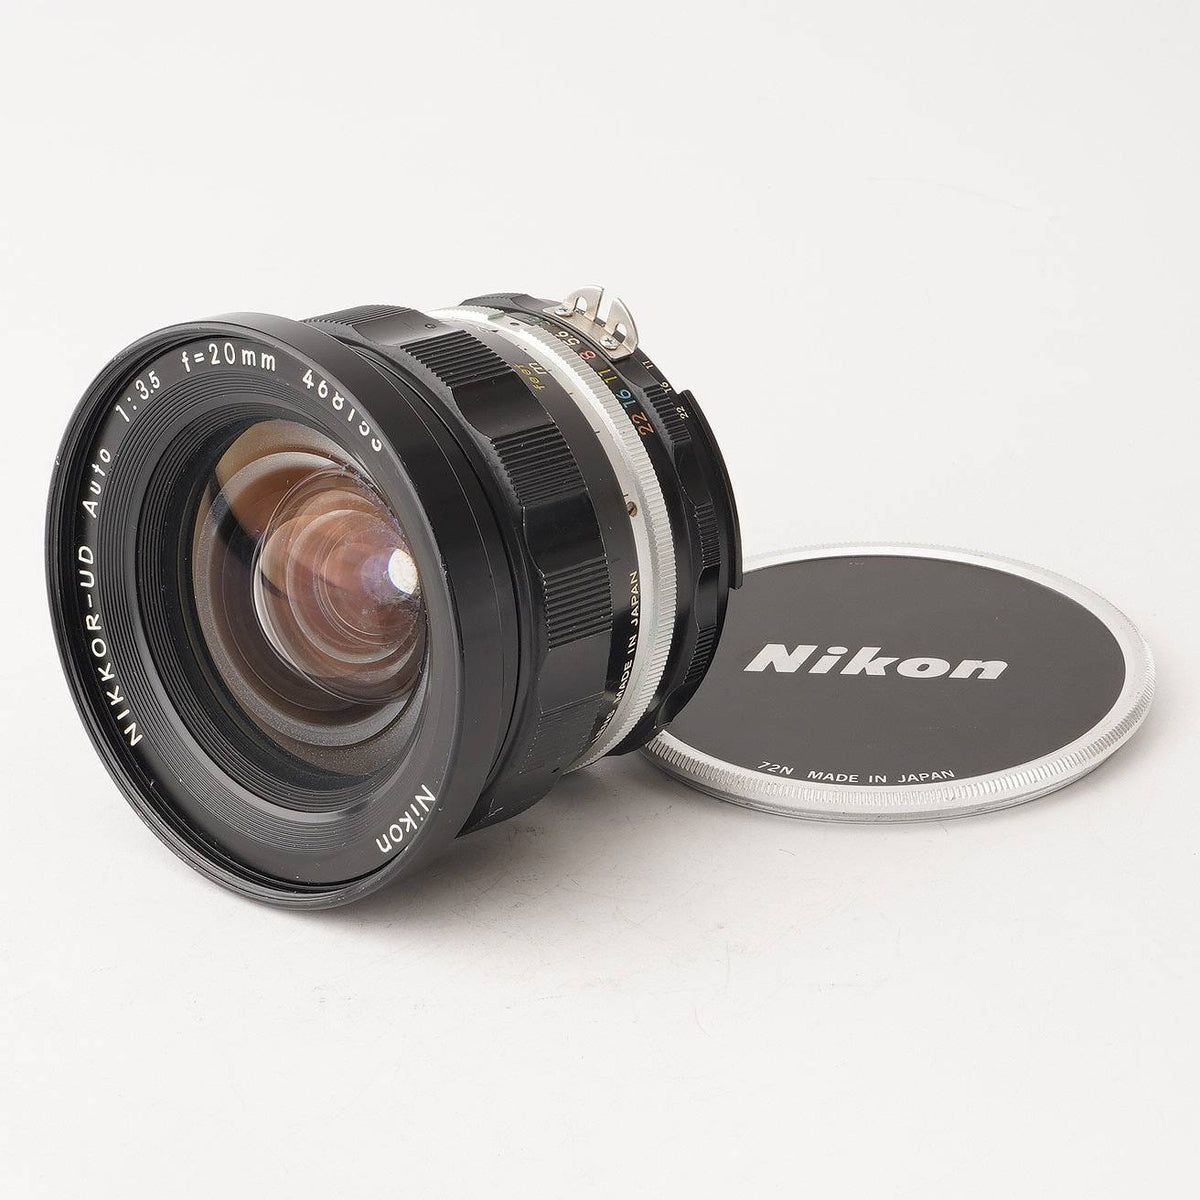 NIKKOR-UD Auto 20mm F3.5 Ai改 良品 - レンズ(単焦点)